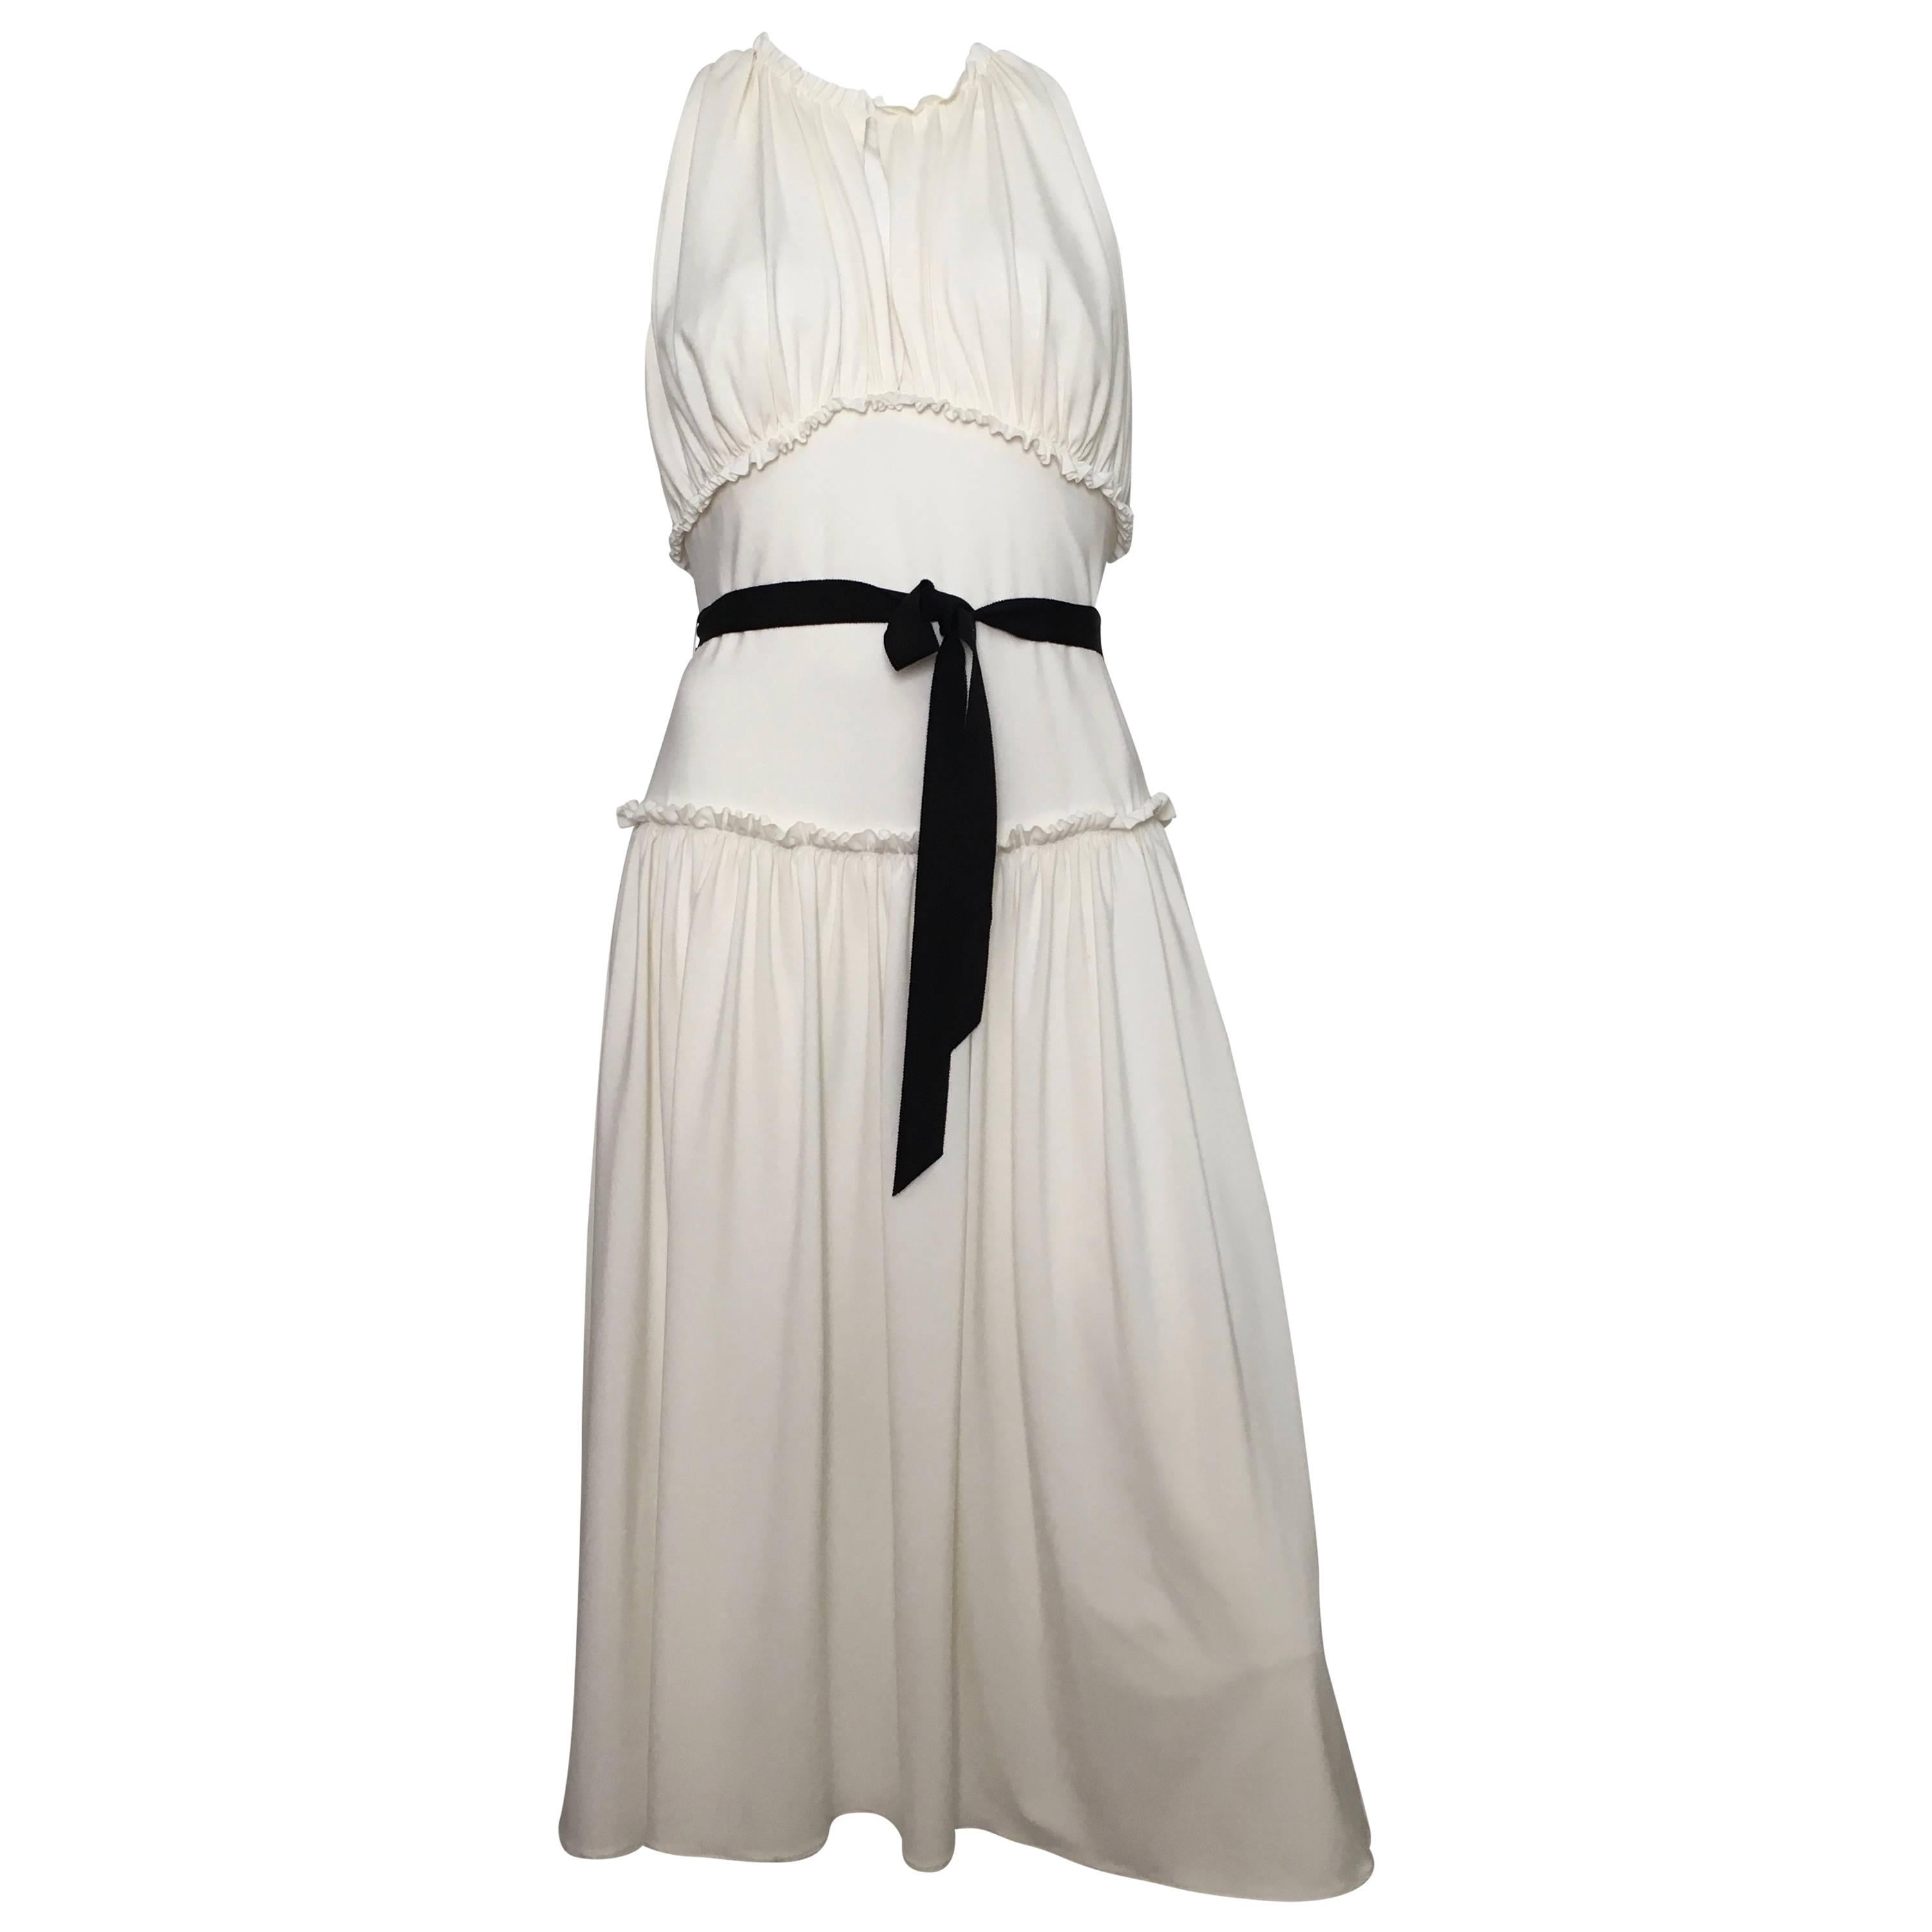 Vera Wang 1990s White Jersey Sleeveless Dress Size 8. For Sale